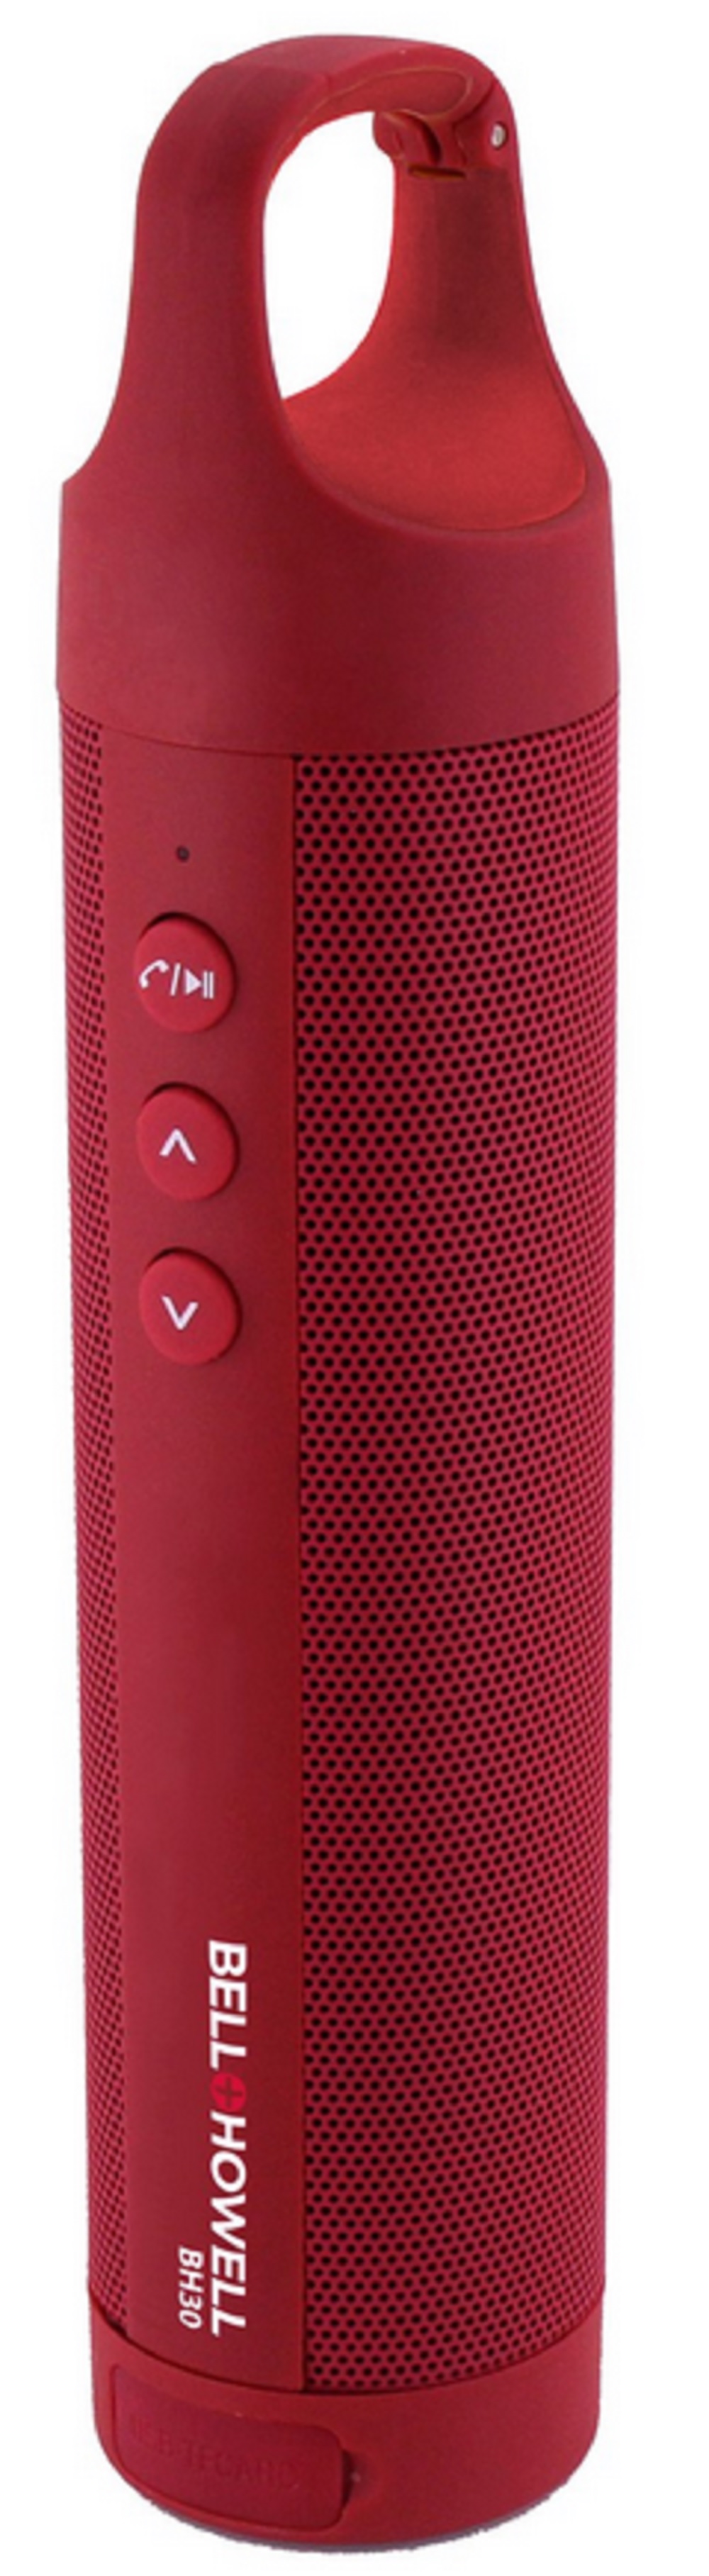 Bell+Howell Slimline Water Resistant Clip-On Bluetooth Speaker